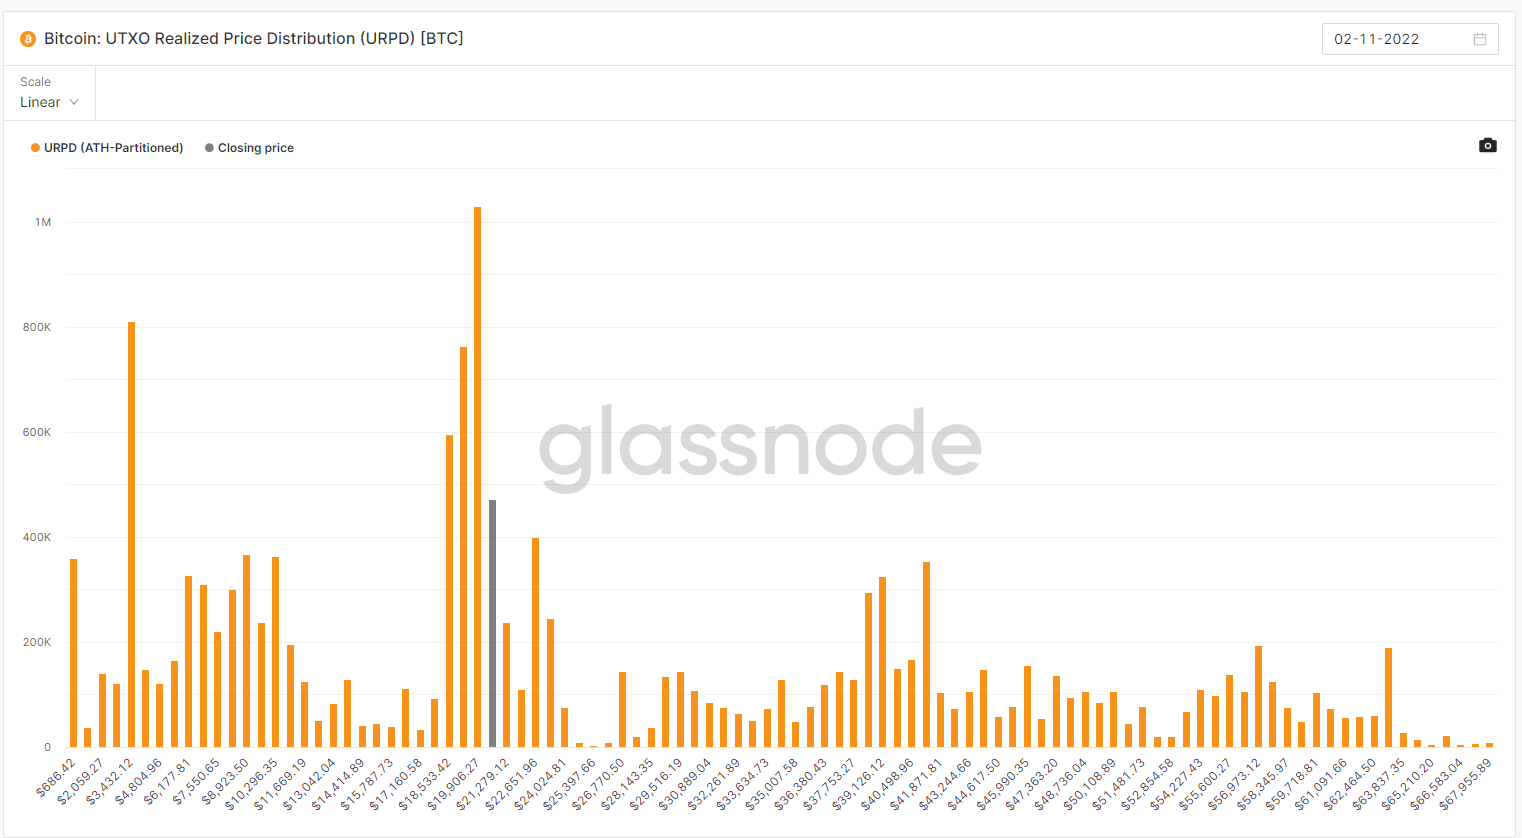 Bitcoin UTXO Realized Price Distribution (Glassnode)